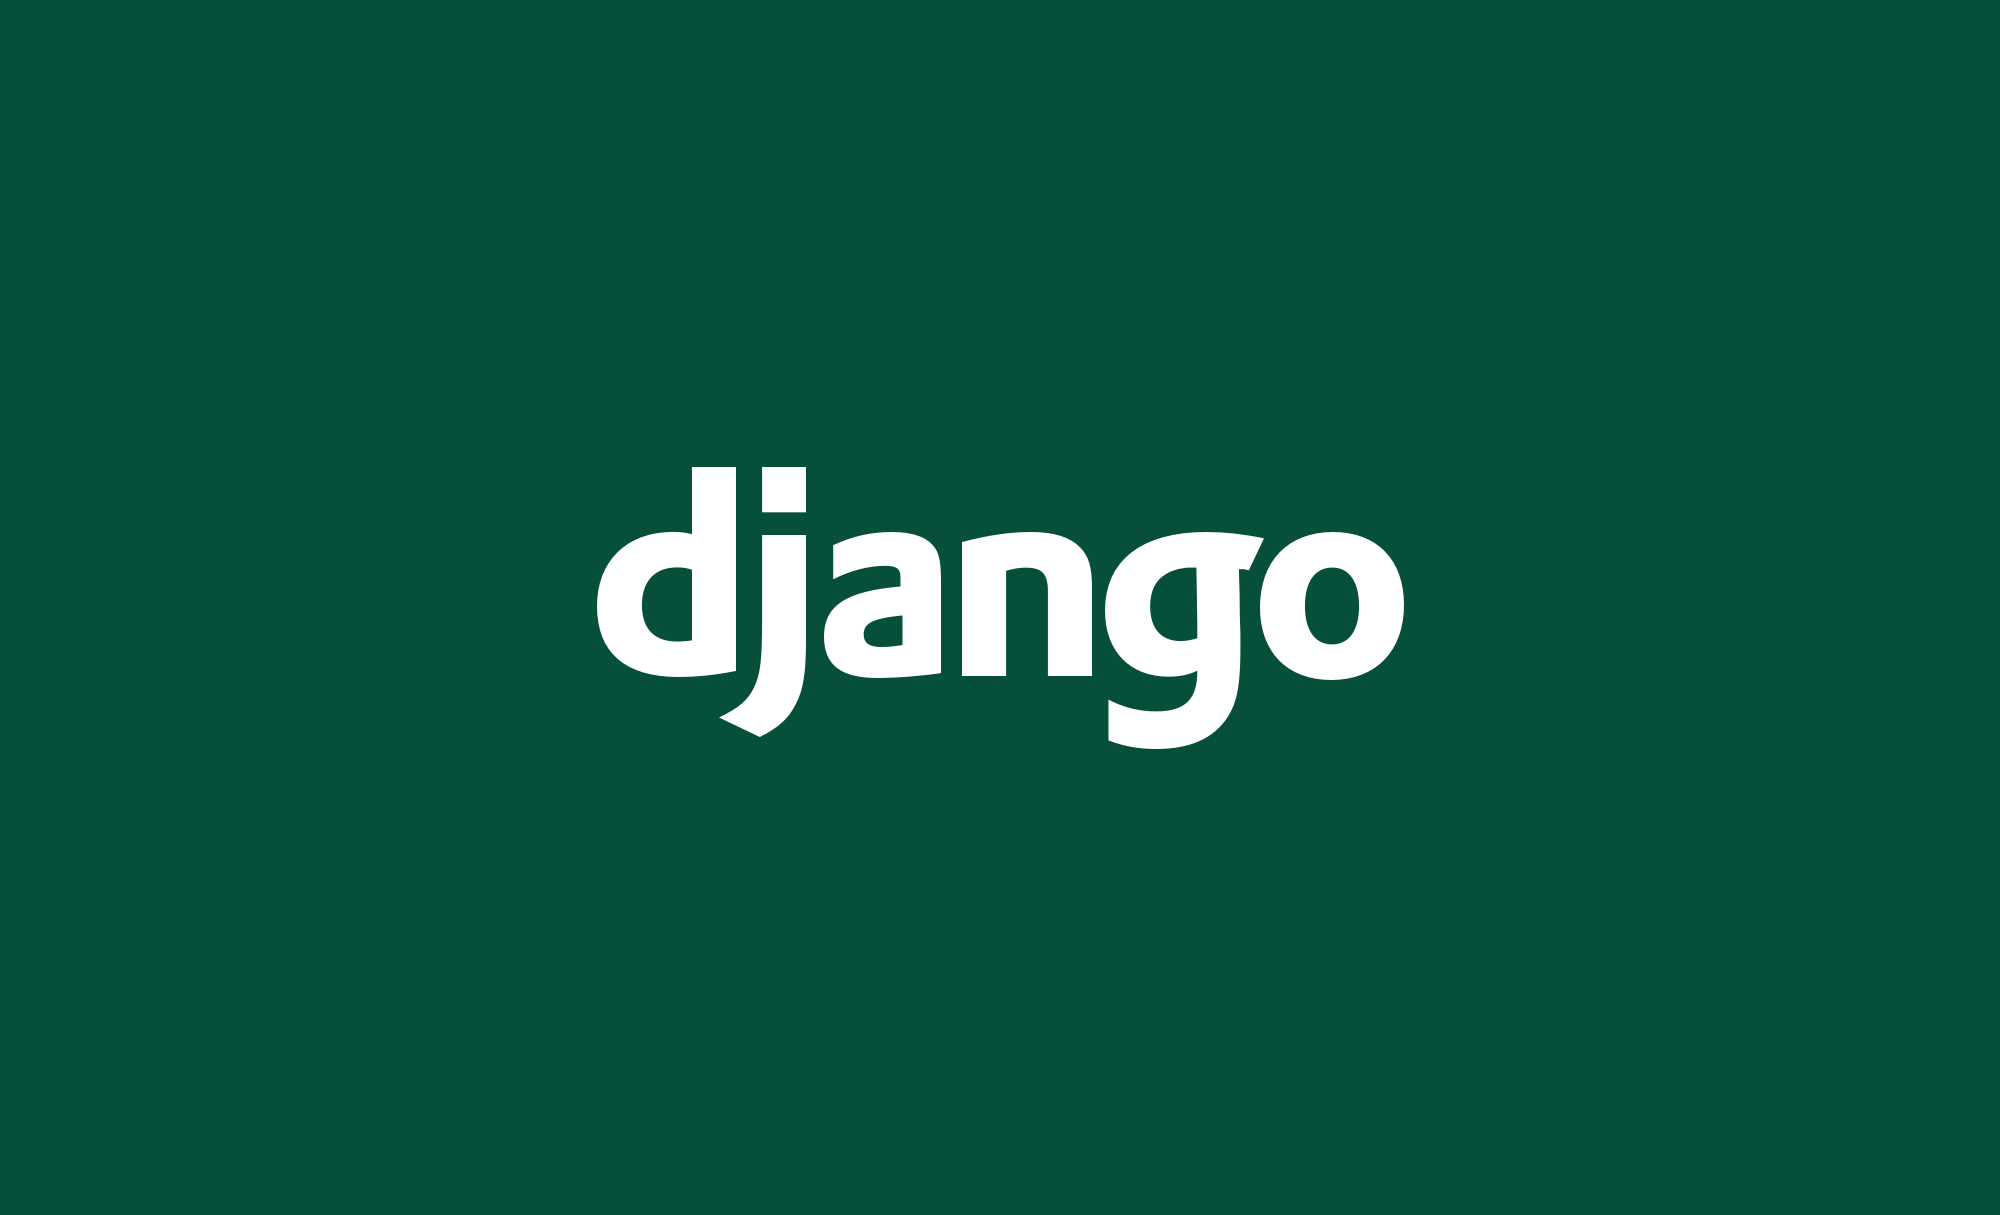 Create a domain alias in your django development environment